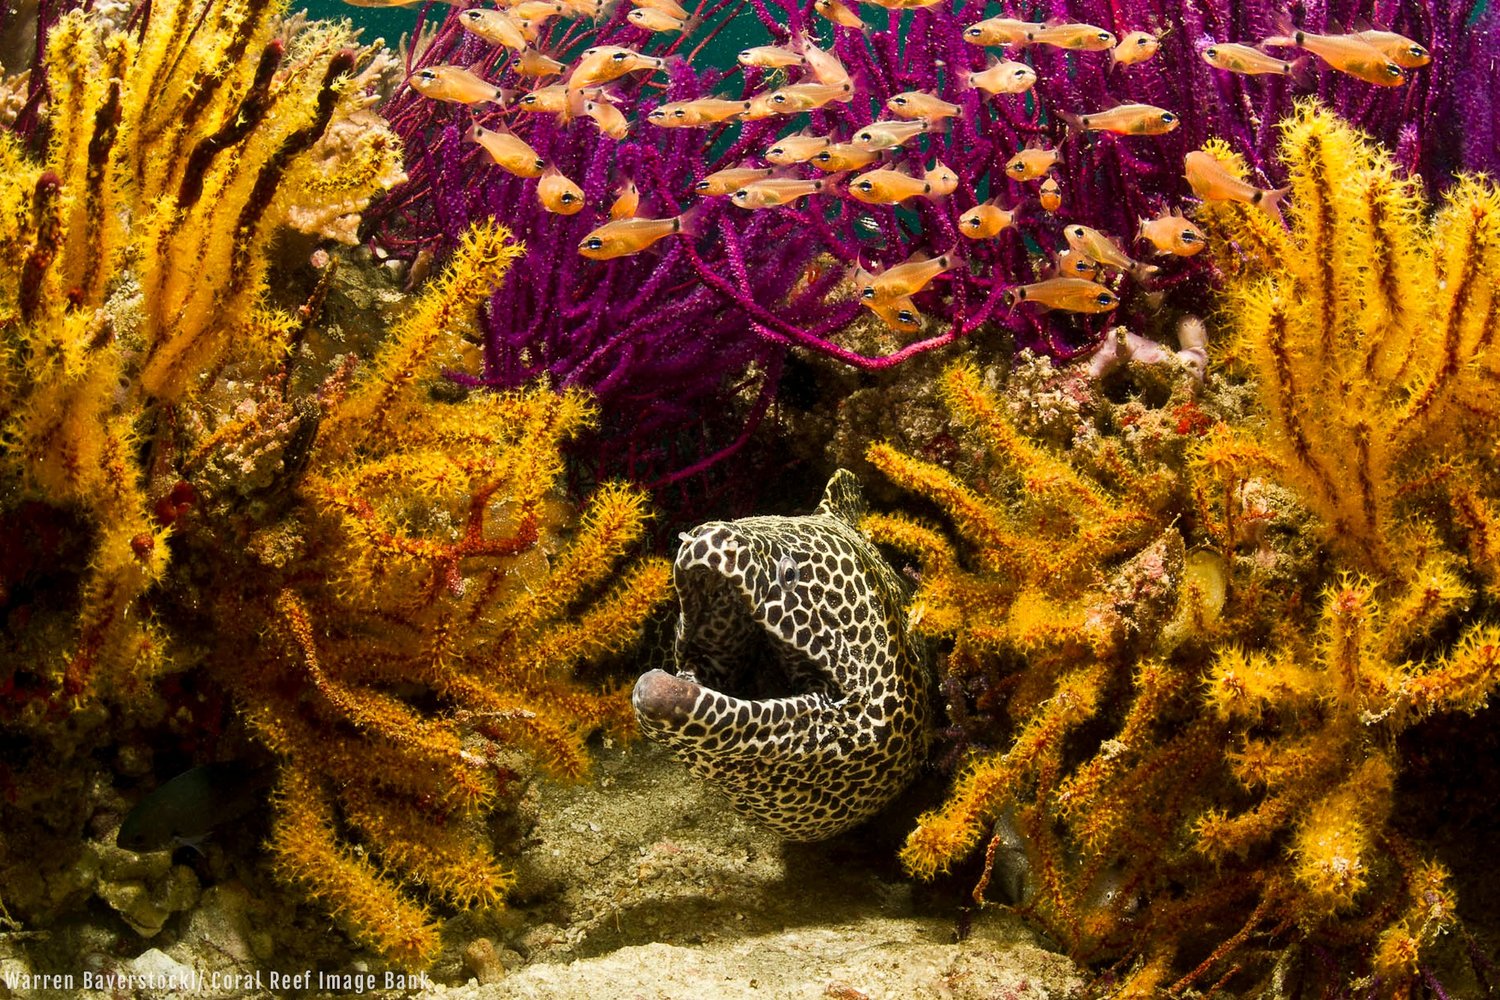 Coral Reef Image Bank